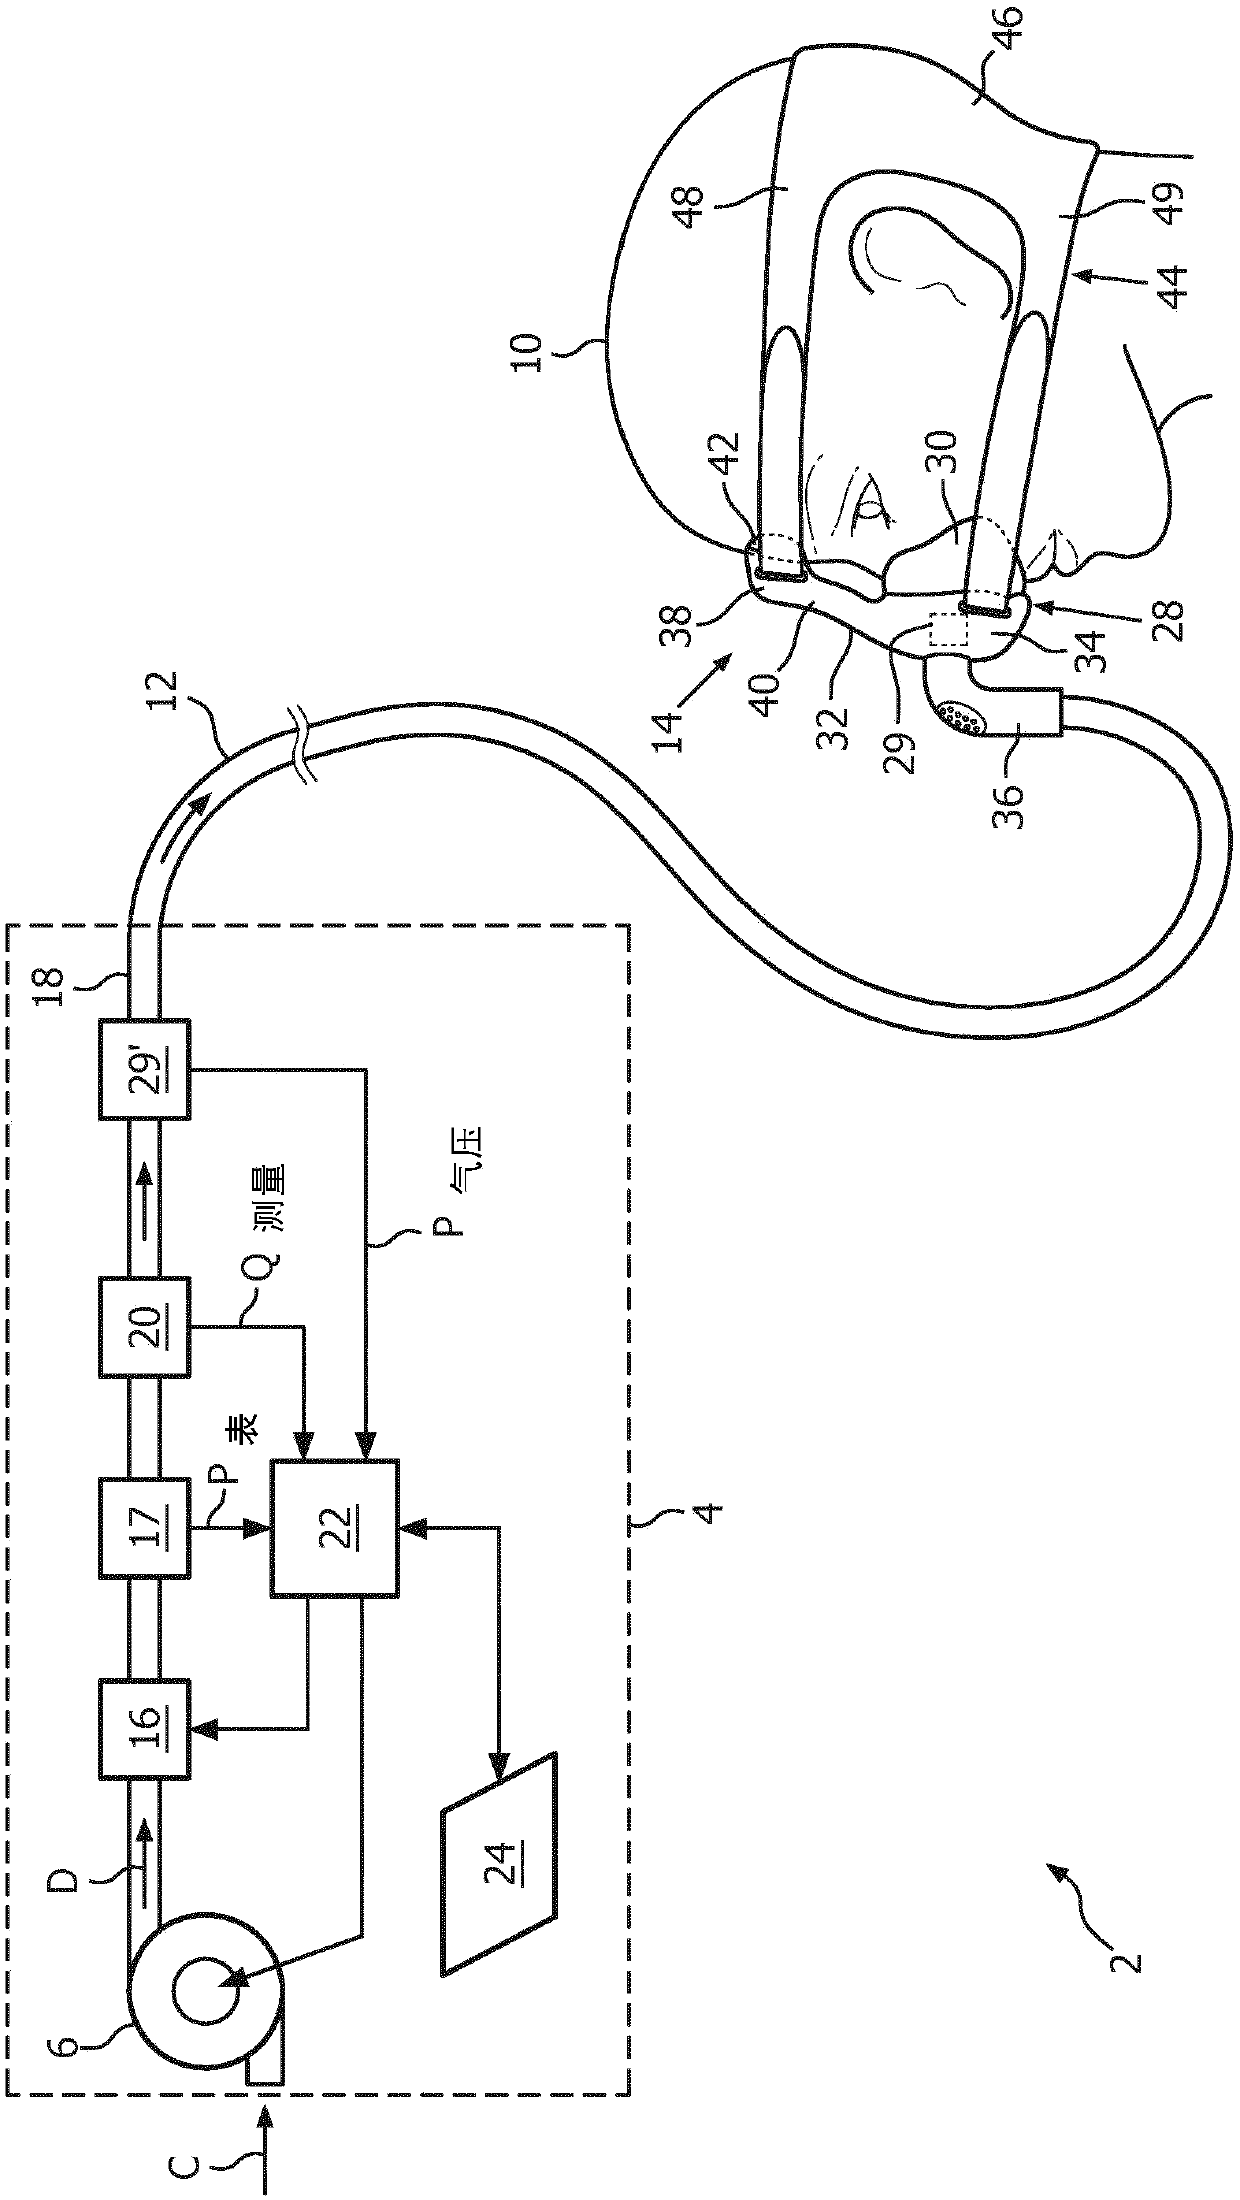 Barometric pressure sensor for variable resistance positive airway pressure device circuit compensation